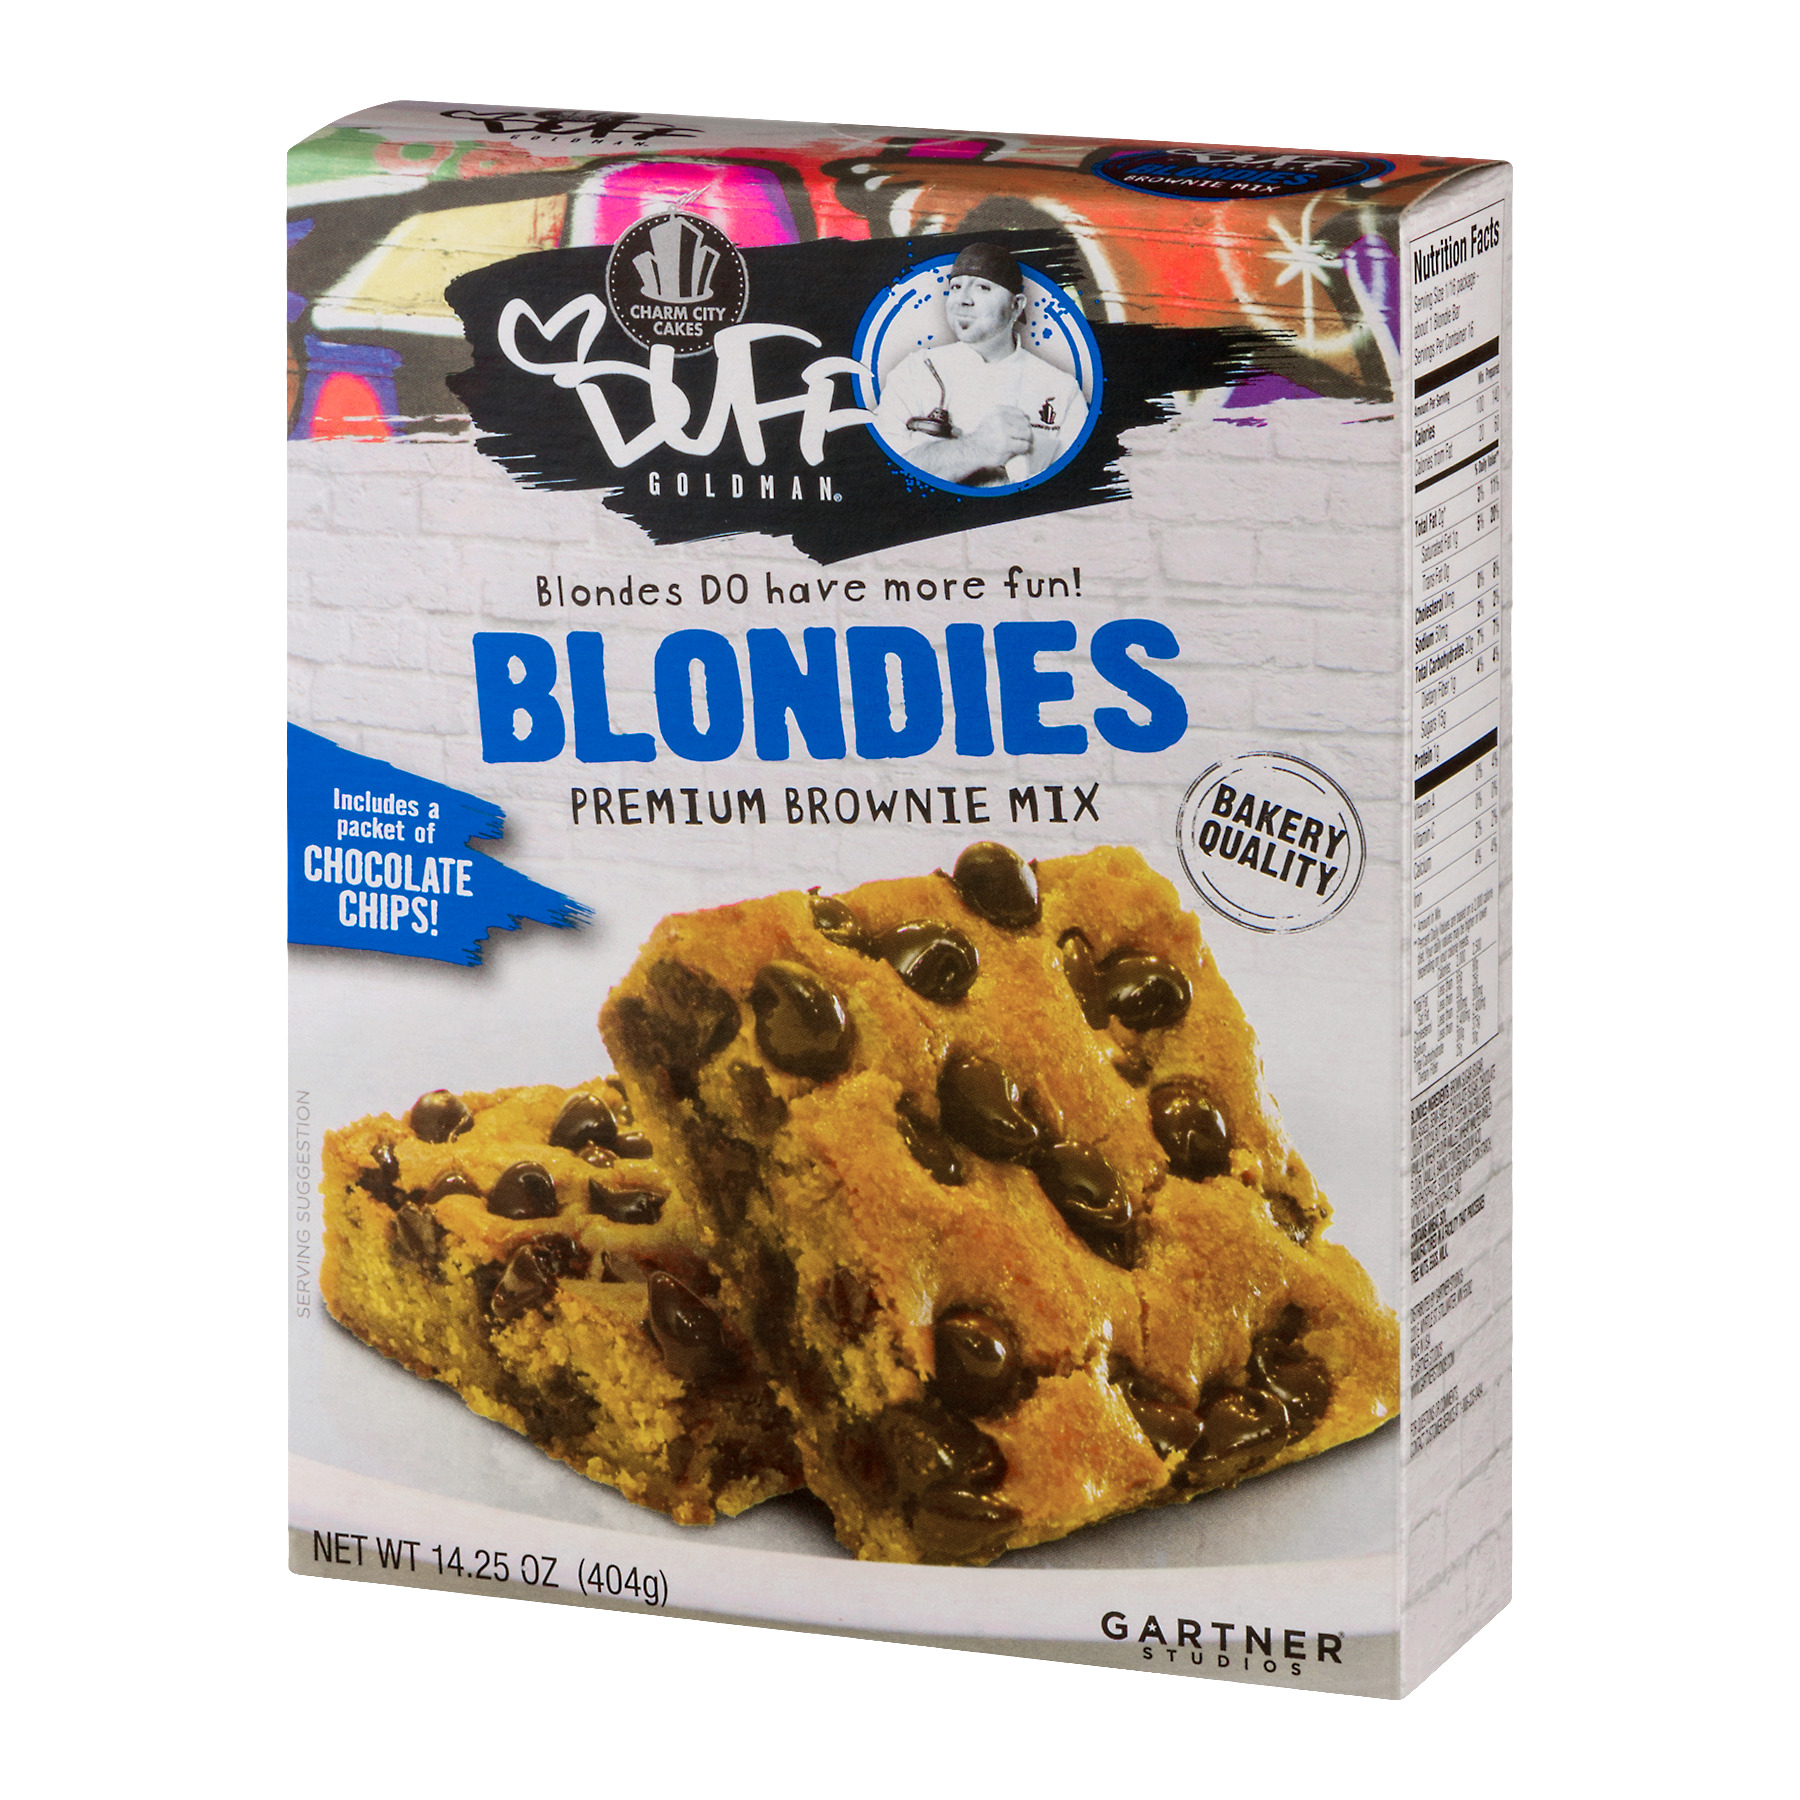 Duff Goldman Blondies Premium Brownie Mix, 14.25 oz - image 3 of 8